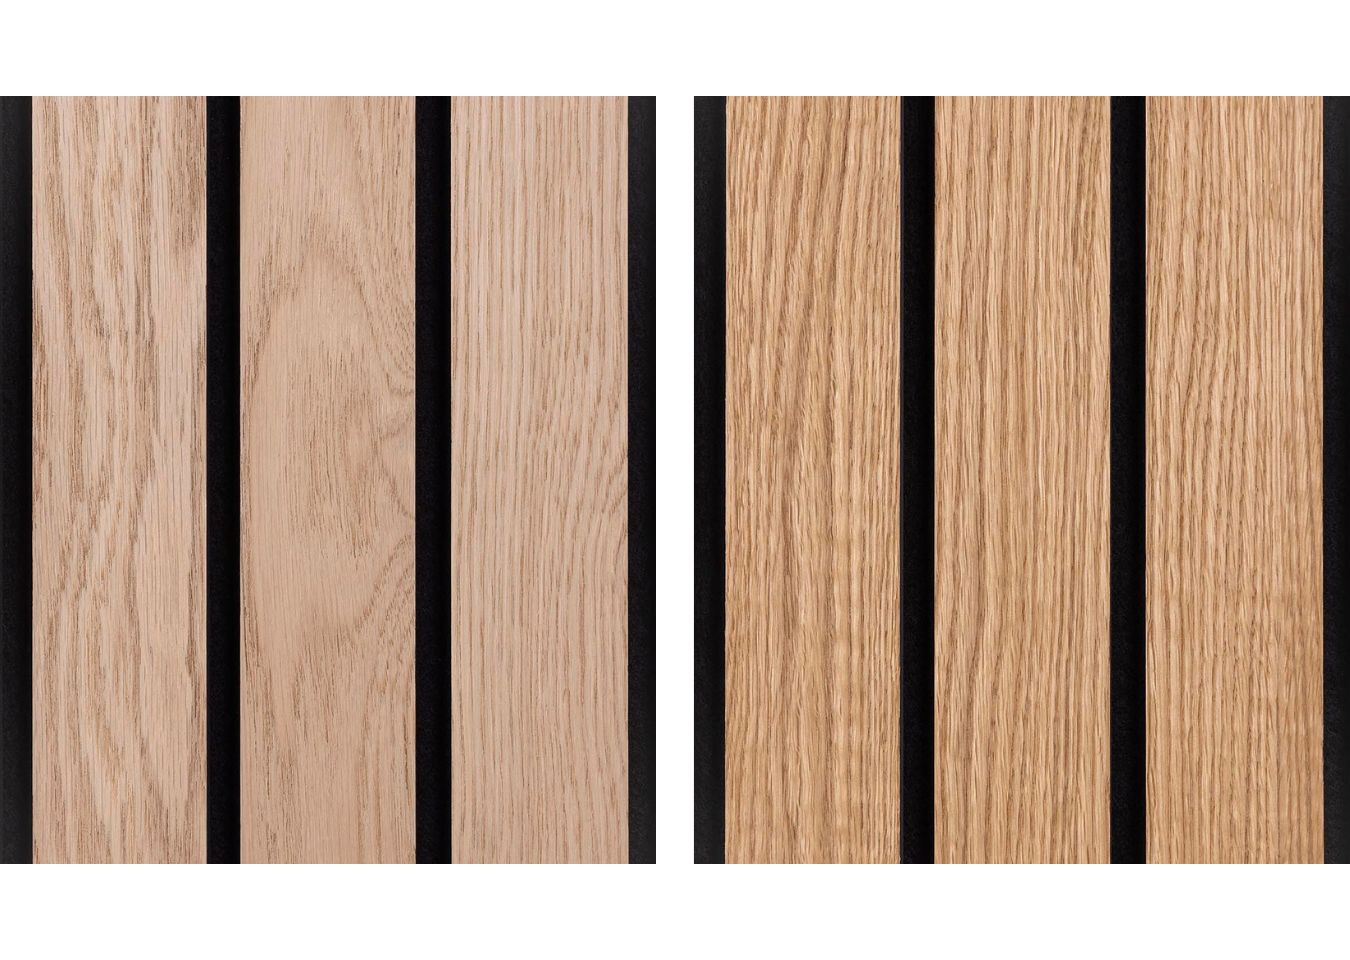 Left: SlatWall Grand Natural Oak panelling with black felt. Right: SlatWall Grand Oiled Oak panelling with black felt.